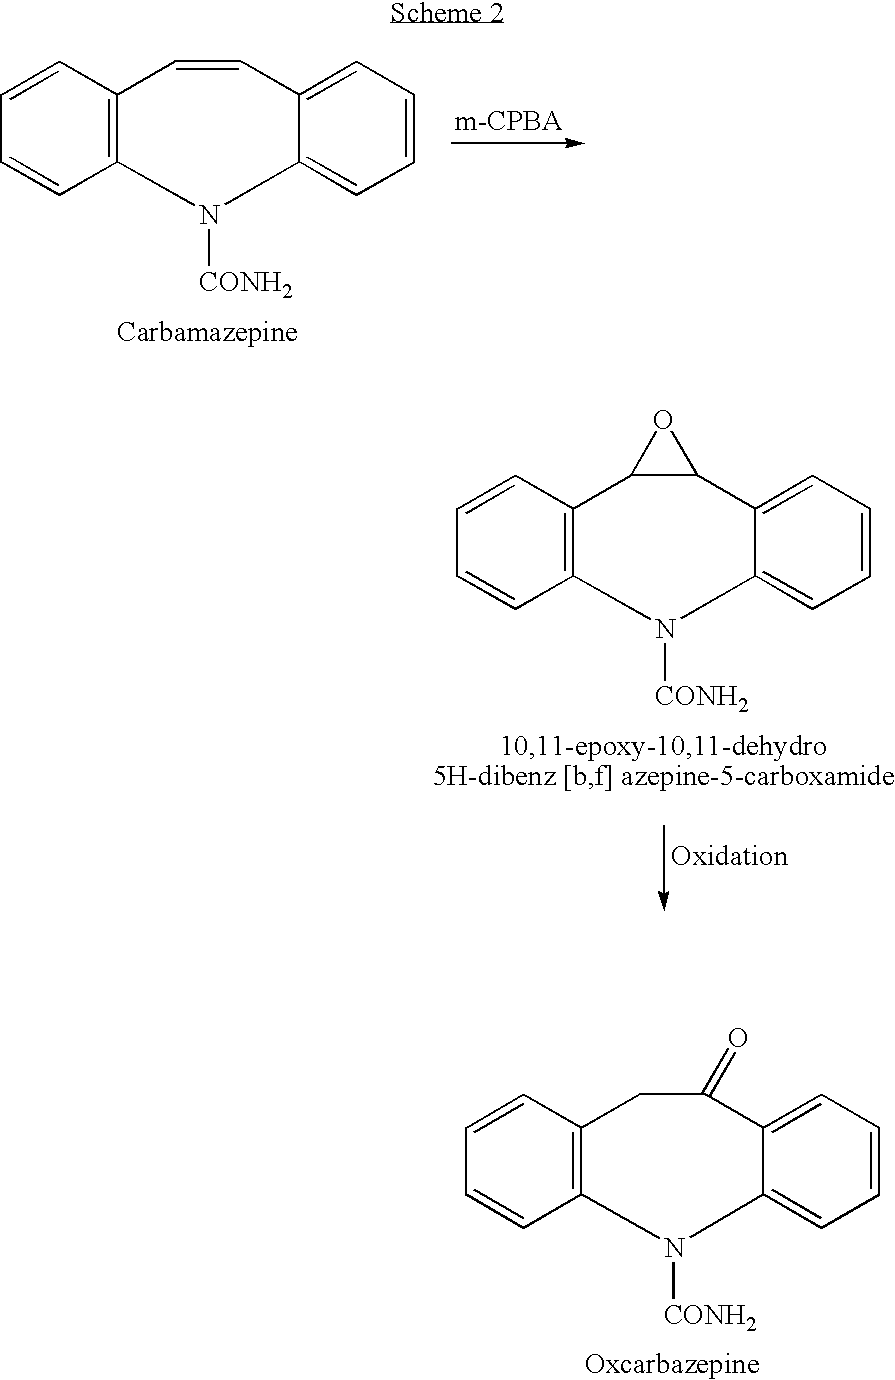 Novel process for preparation of 10-oxo-10, 11-dihydro-5h-dibenz [b,f] azepine-5-carbox- amide (oxcarbazepine) via intermediate, 10-methoxy-5h-debenz[b,f] azepine-5-carbonyl- chloride